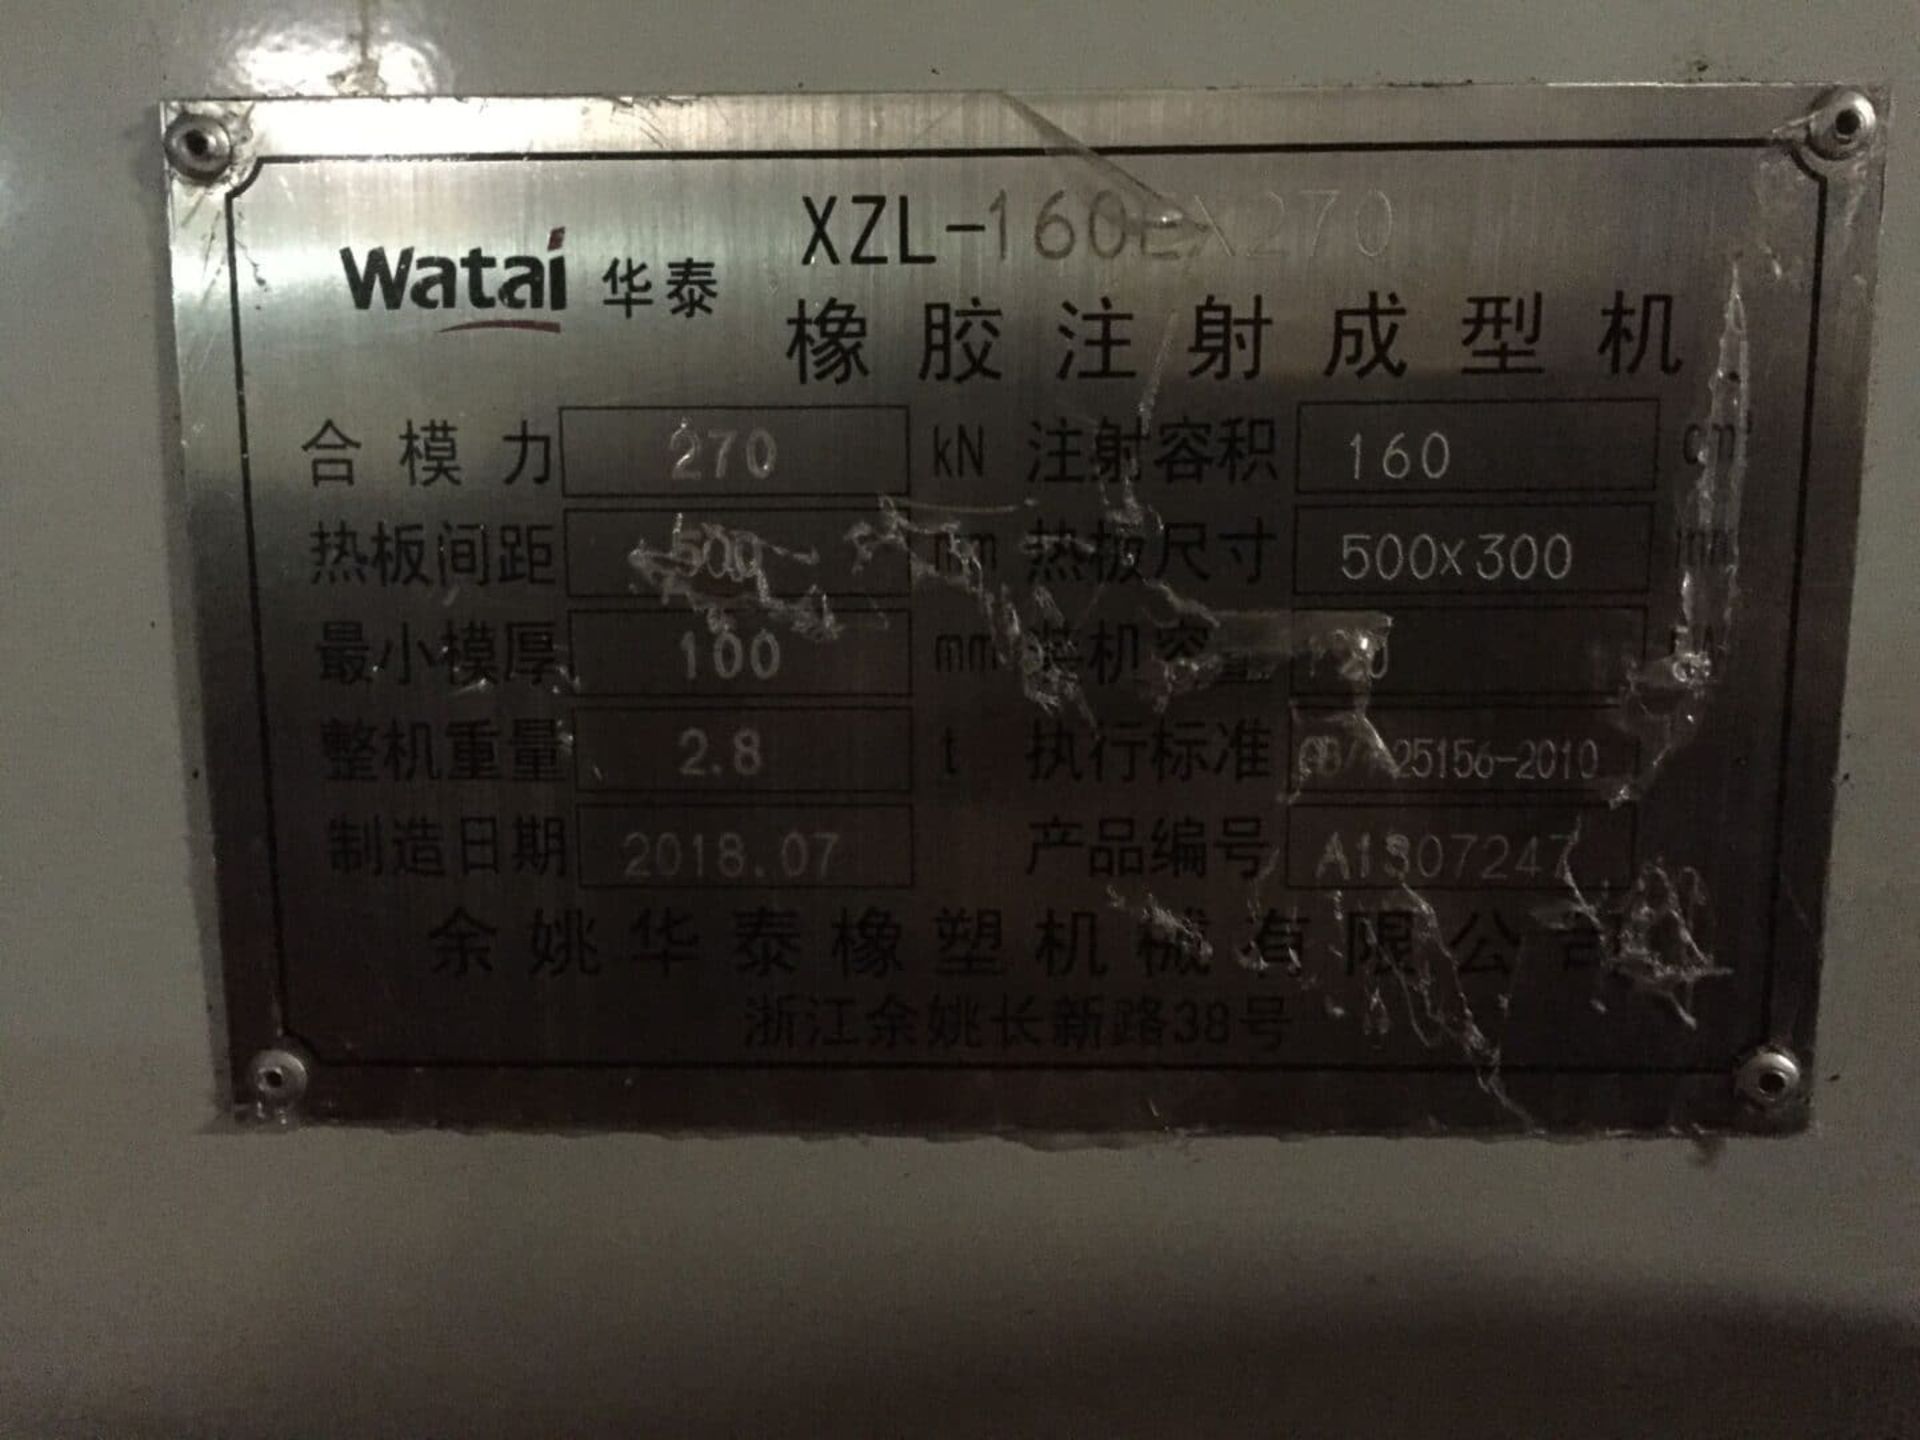 Watai Rubber Injection Molding Machine XZL-160EX27 - Image 22 of 22